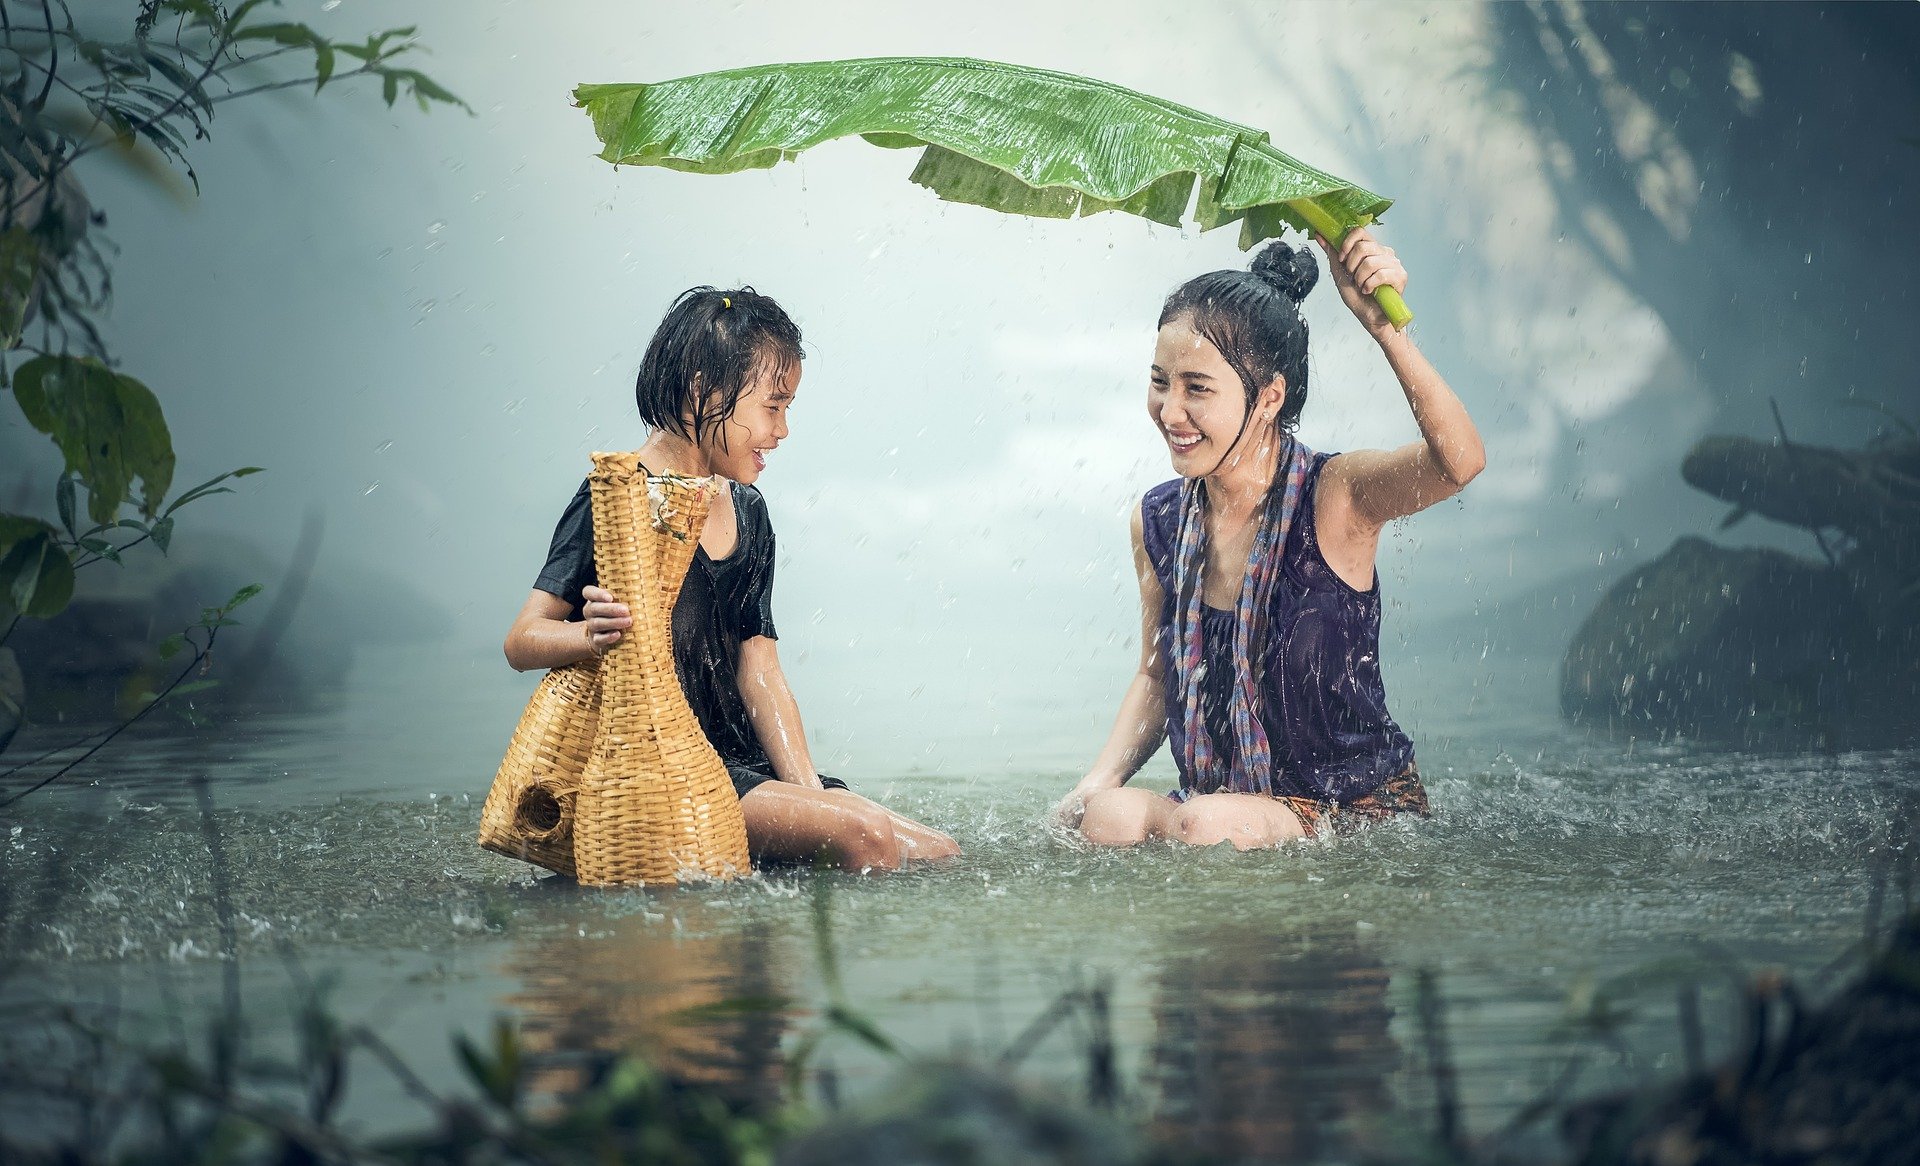 https://pixabay.com/photos/woman-kid-rain-leaf-umbrella-1807533/